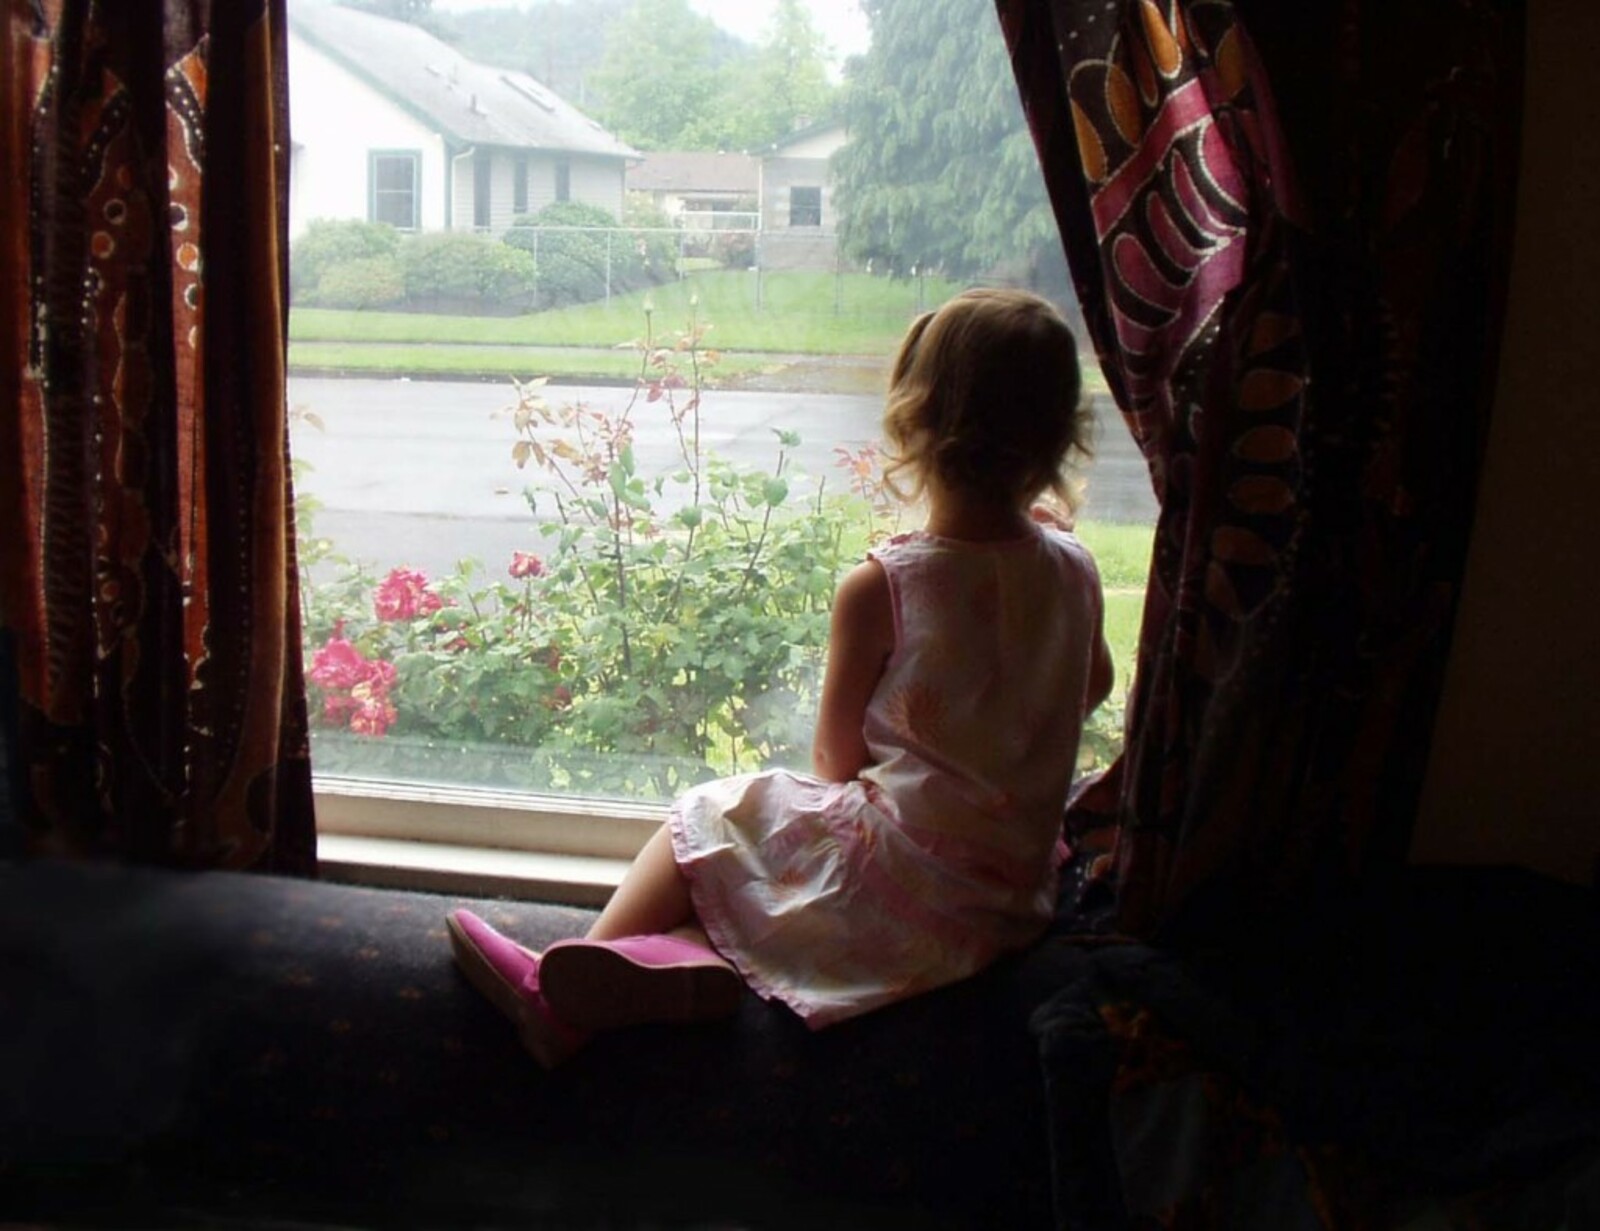 I looked out of the window. Девочка у окна. Маленькая девочка у окна. Ребенок у окна. Маленькая девочка сидит на подоконнике.